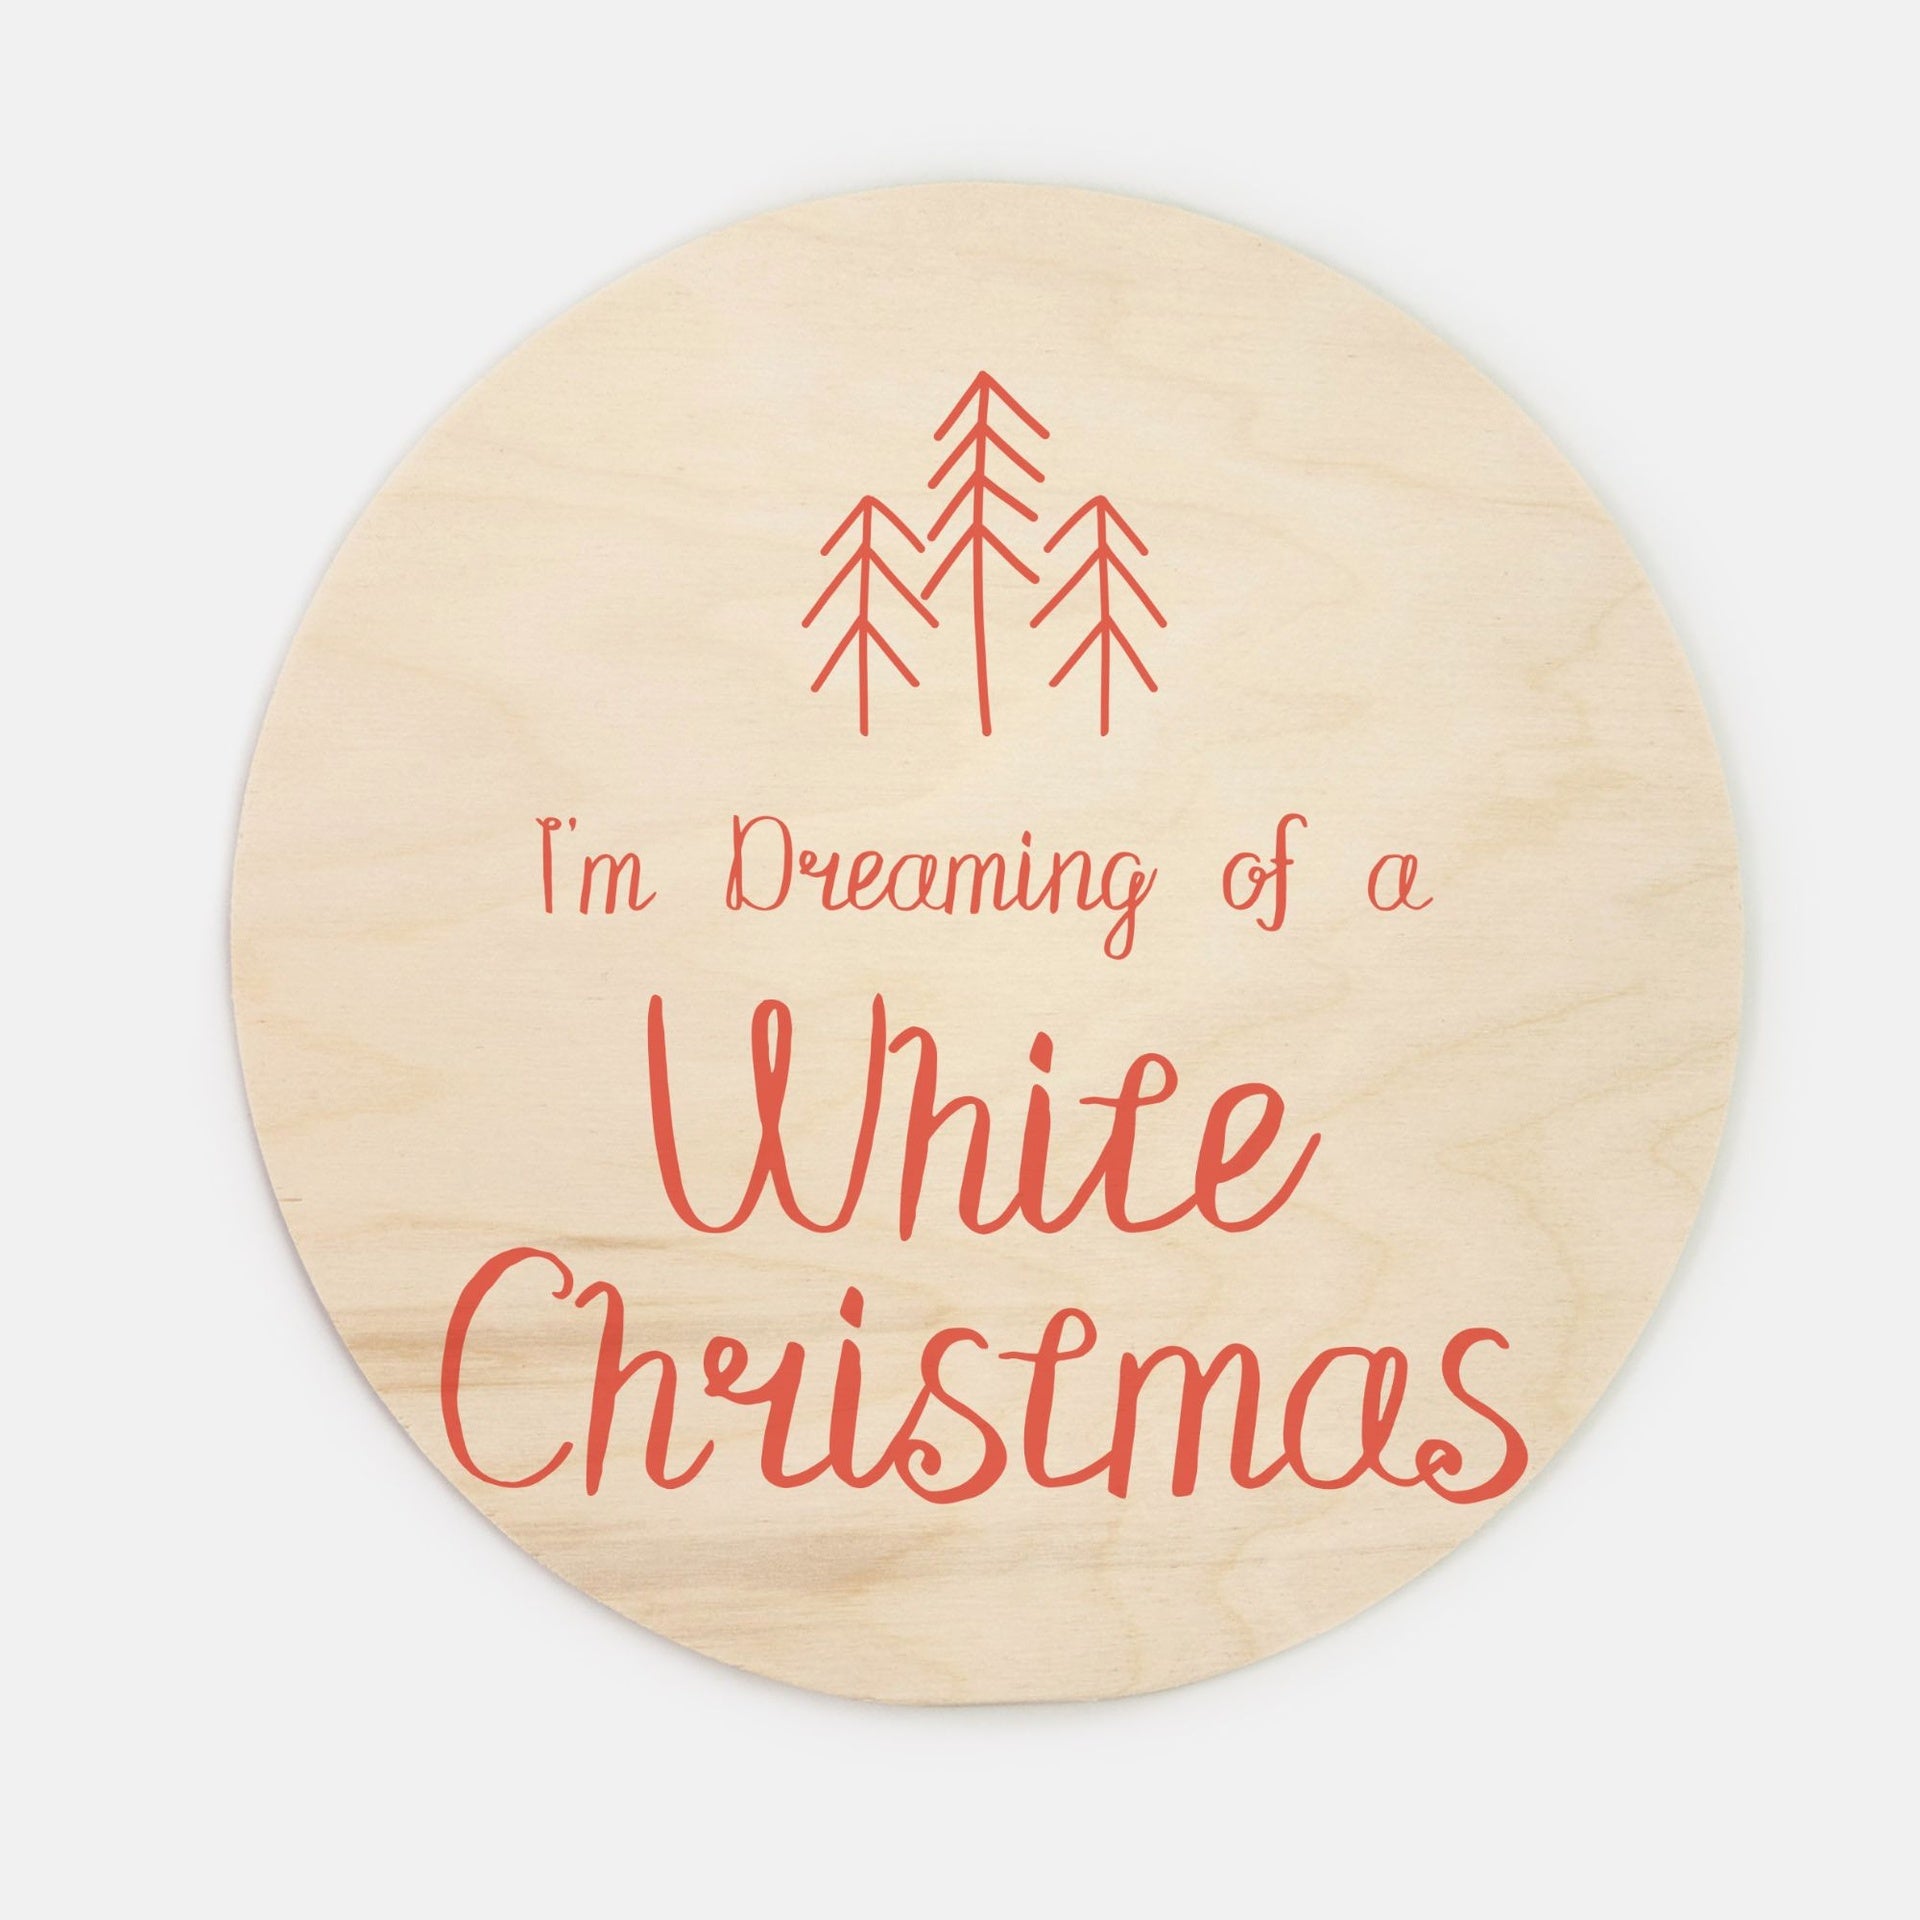 10" Round Wood Sign - White Christmas